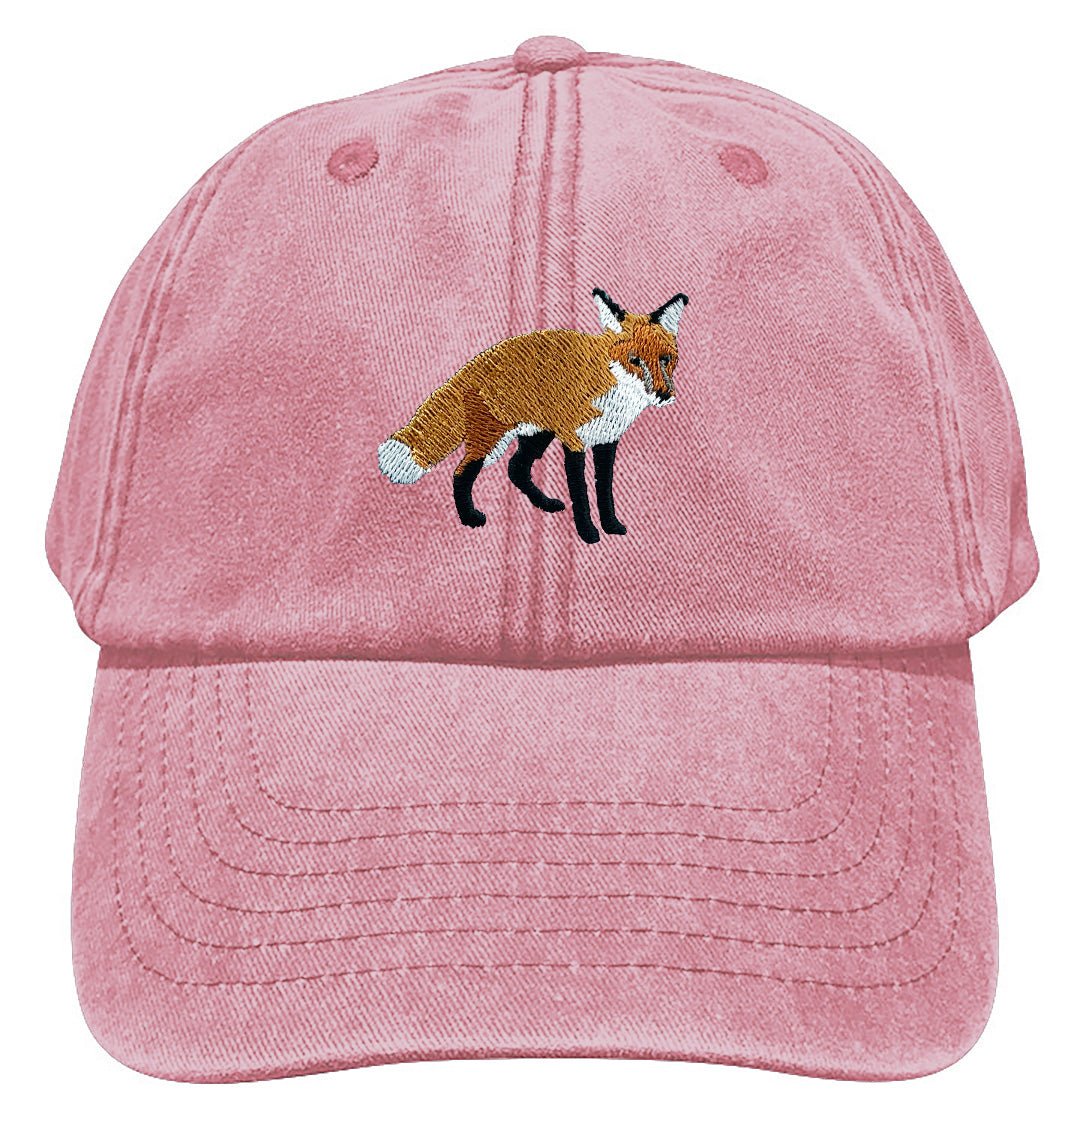 Red Fox Wildlife Baseball Cap - British Wildlife Conservation Hat, Vintage Light Denim